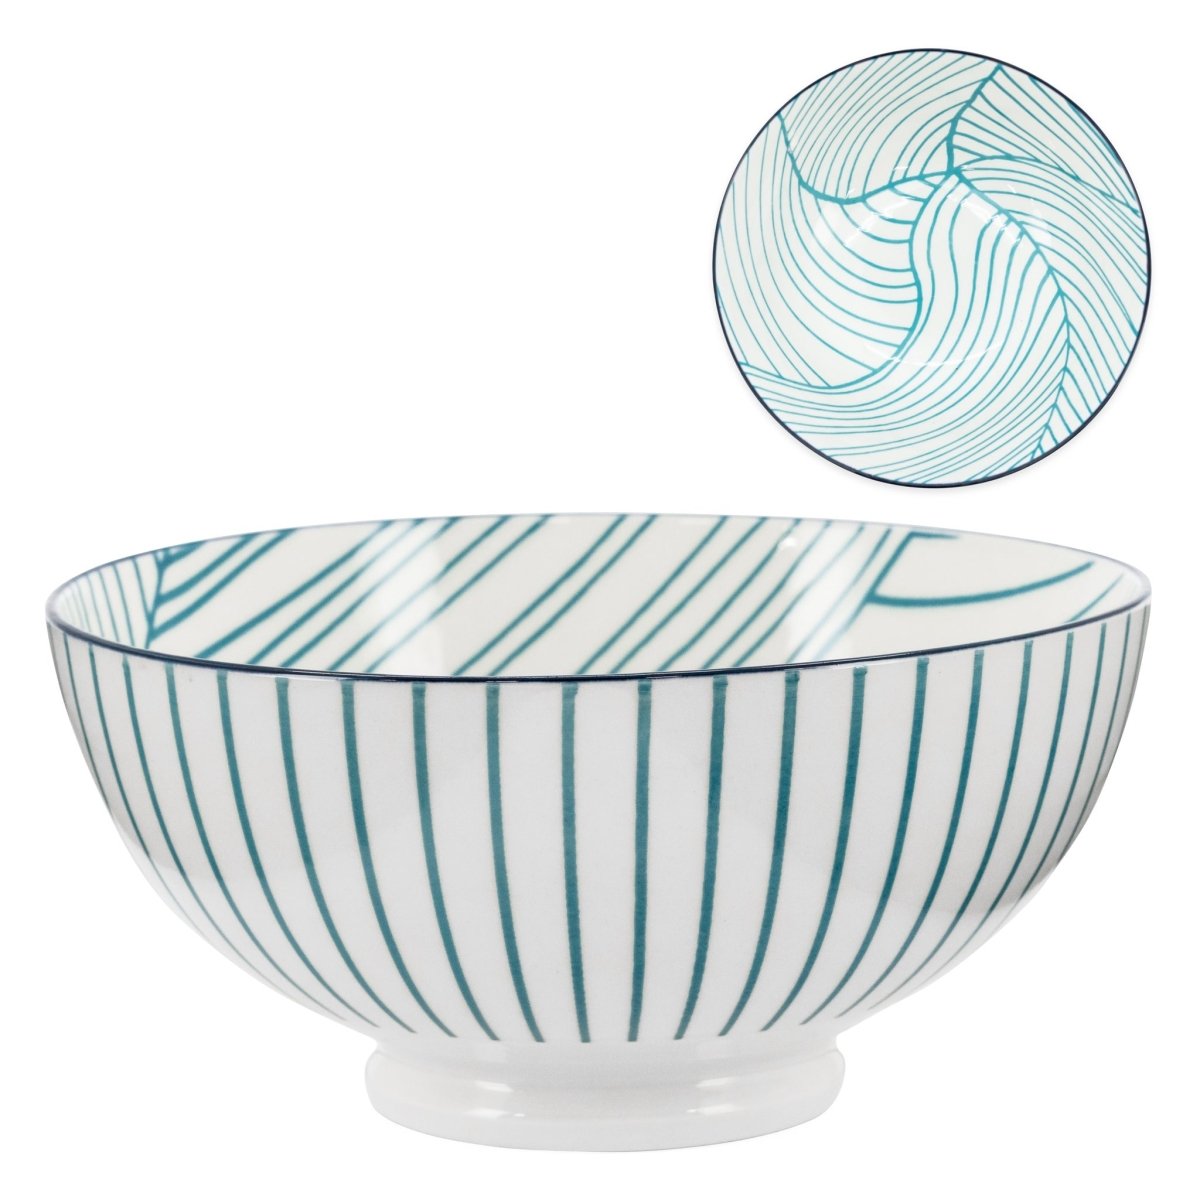 Teal Linear Leaf kiri Porcelain 8 inch Diameter Bowl - Rustic Furniture Outlet